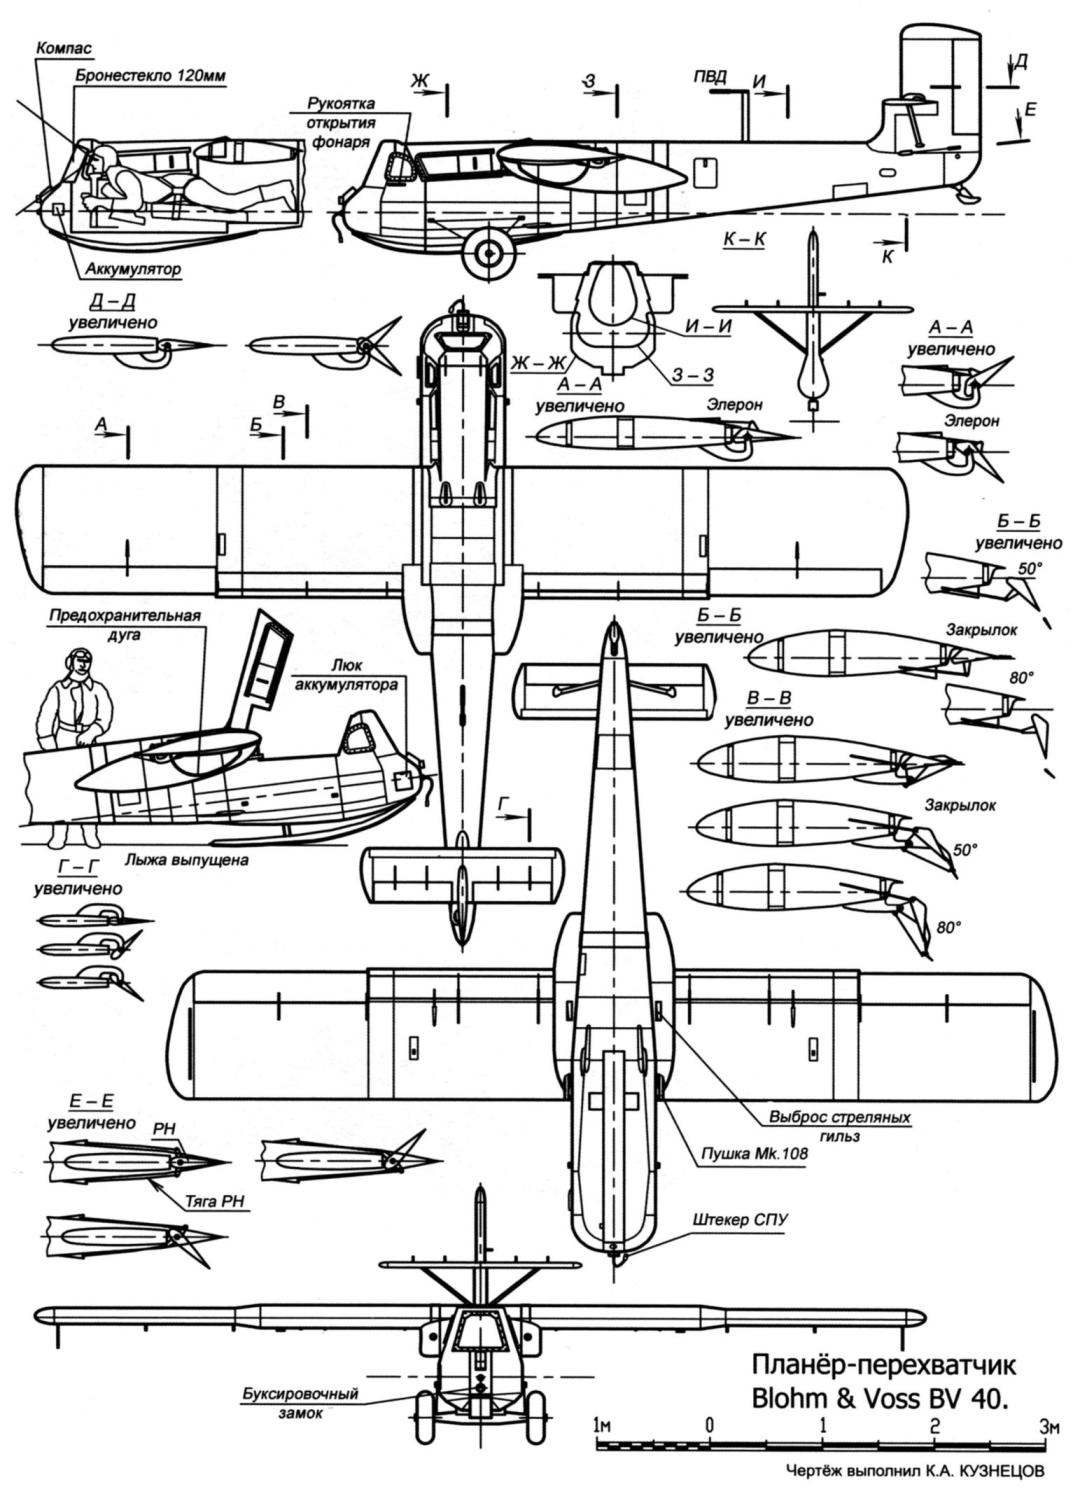 Glider interceptor Blohm & Voss BV 40.